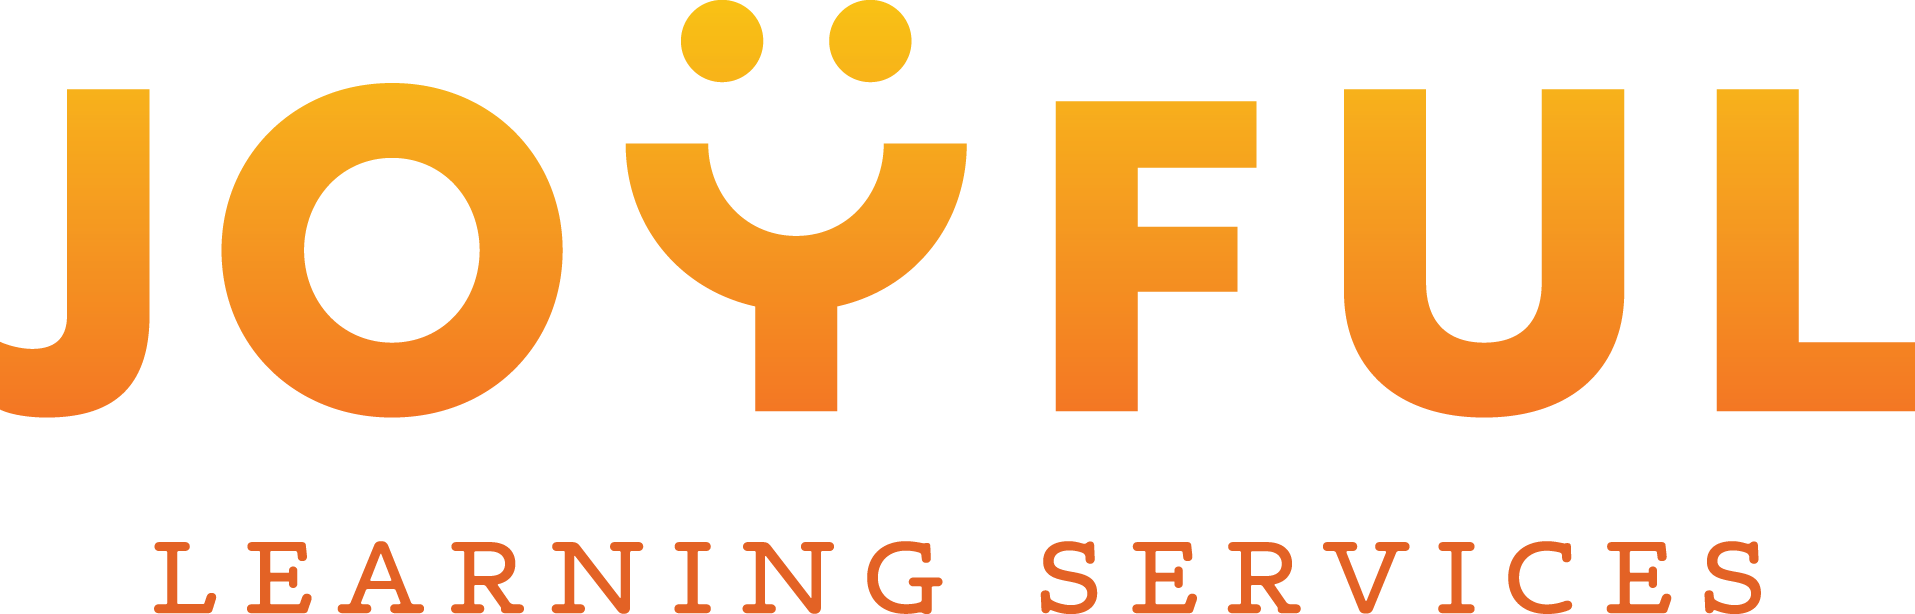 Joyful_Learning_Services_logo_gradient-orange.png